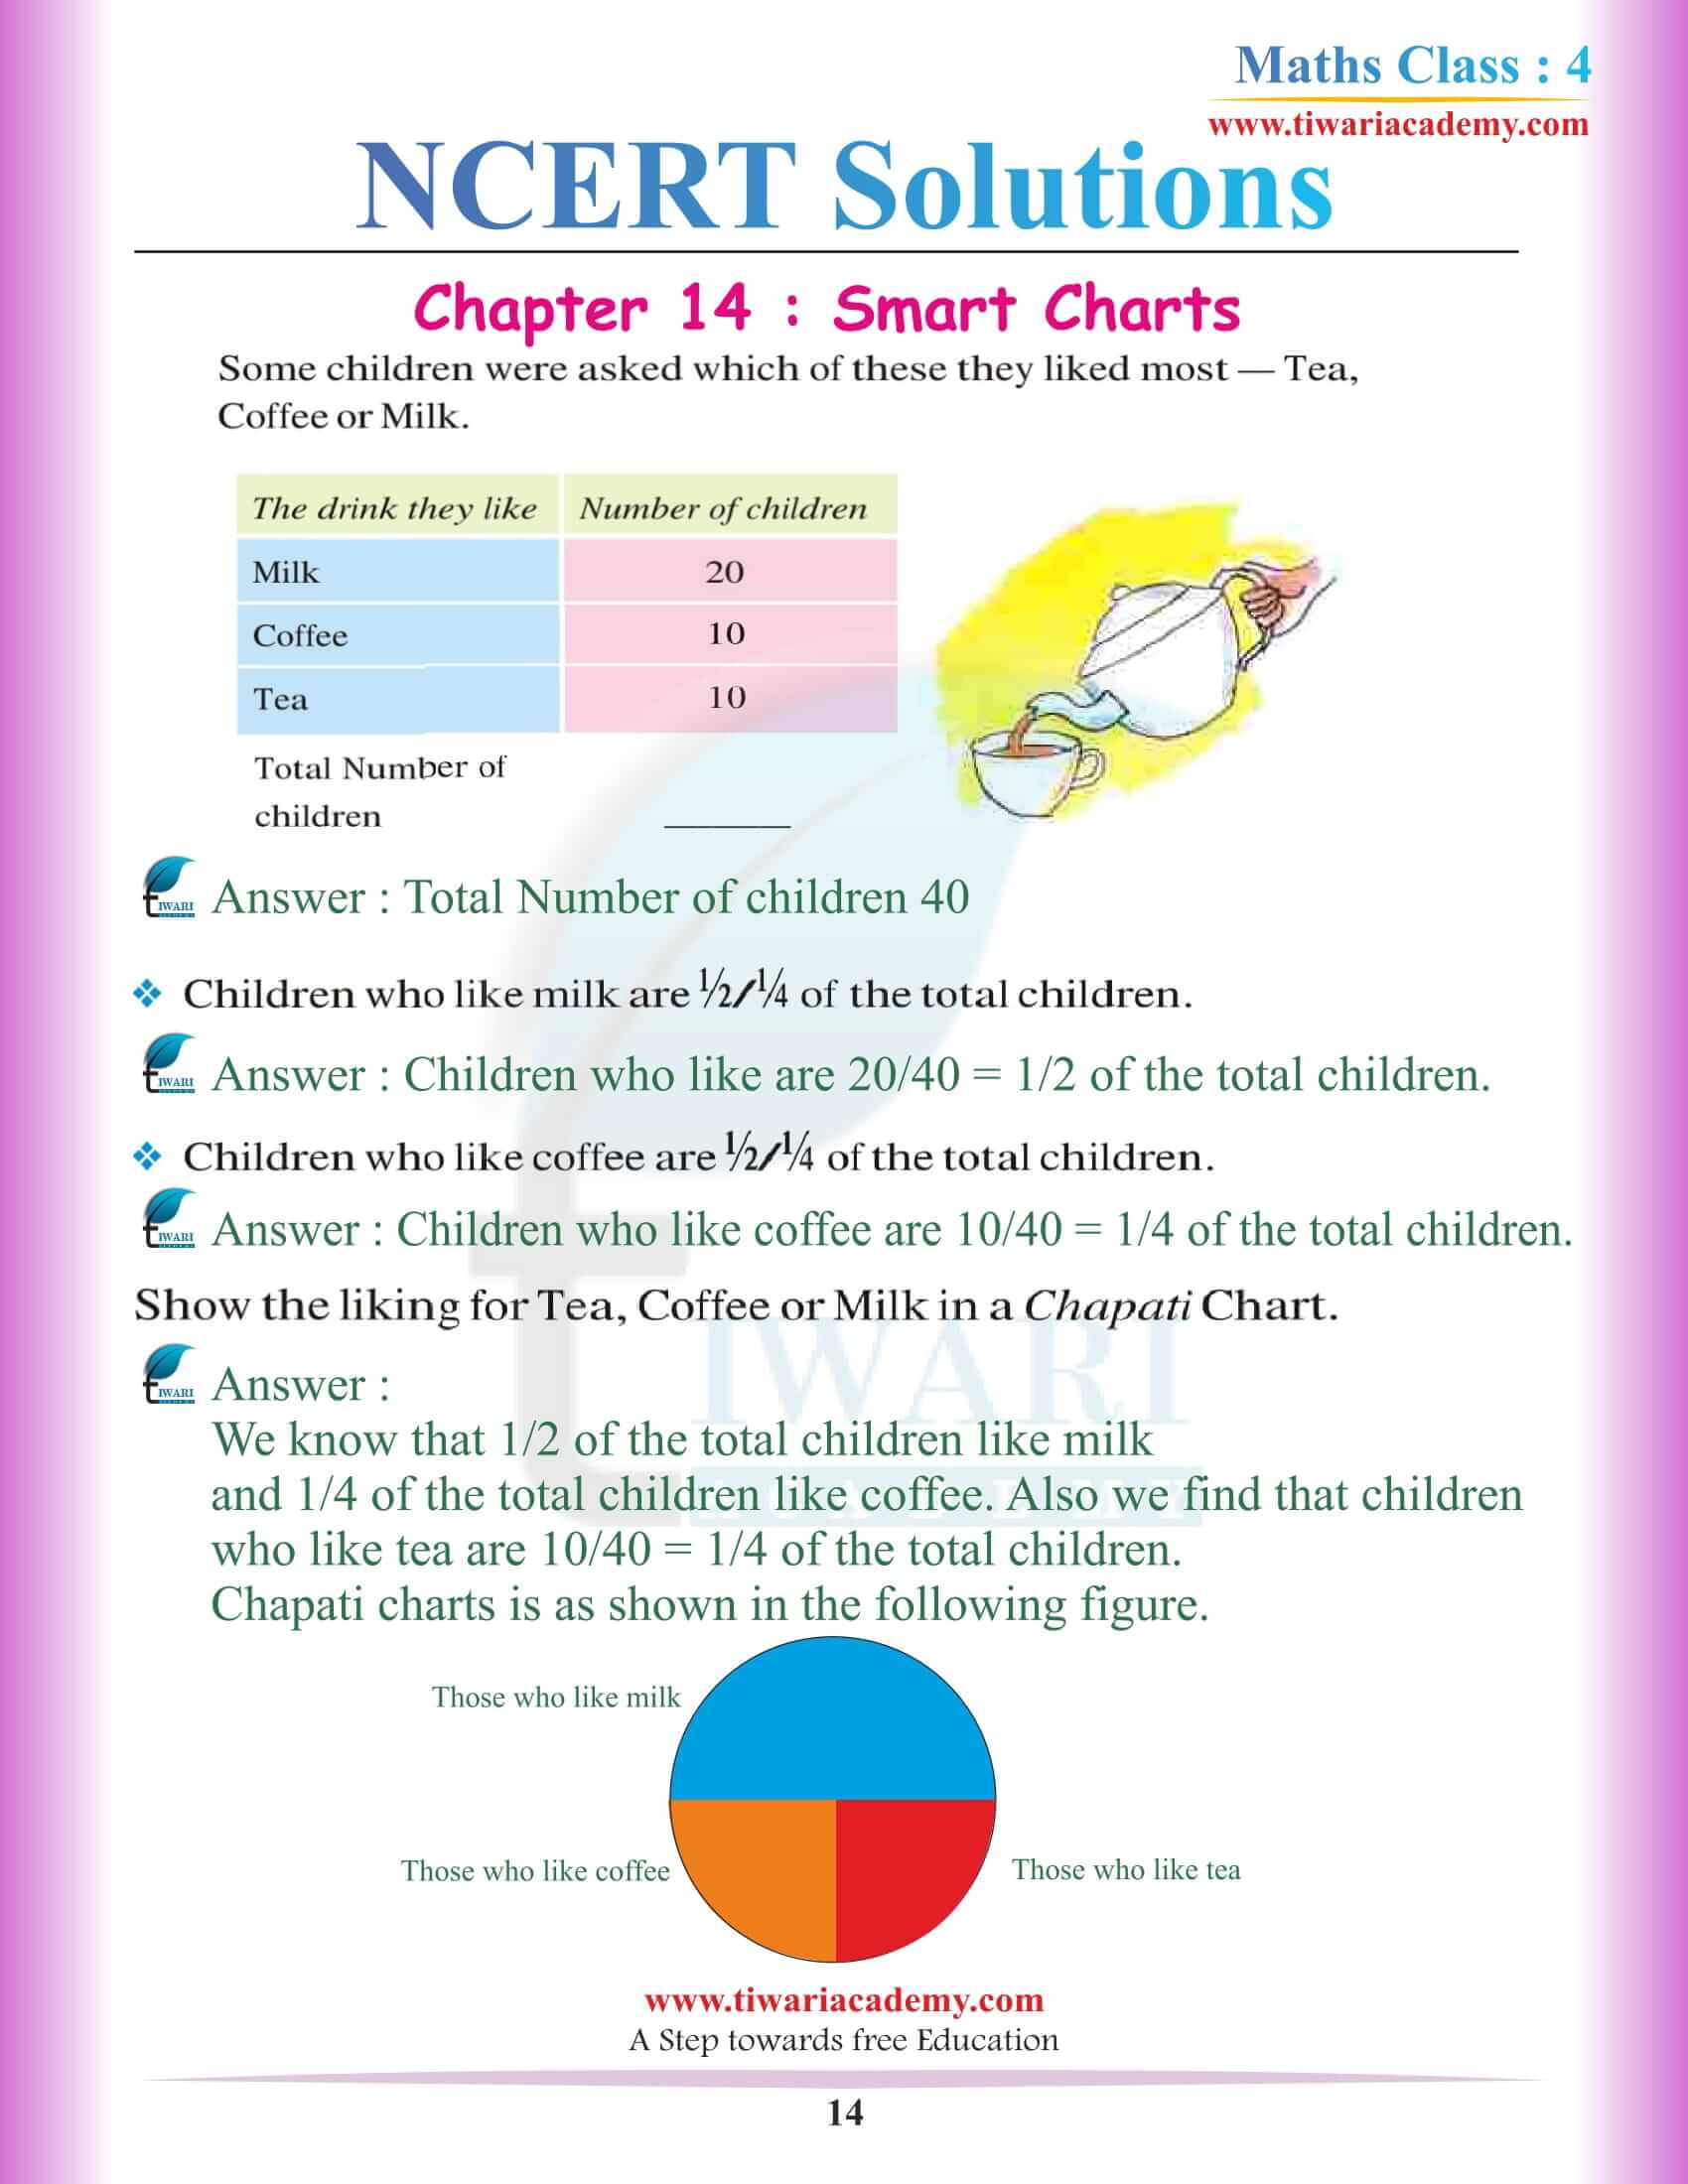 Class 4 Maths NCERT Chapter 14 Solutions download free